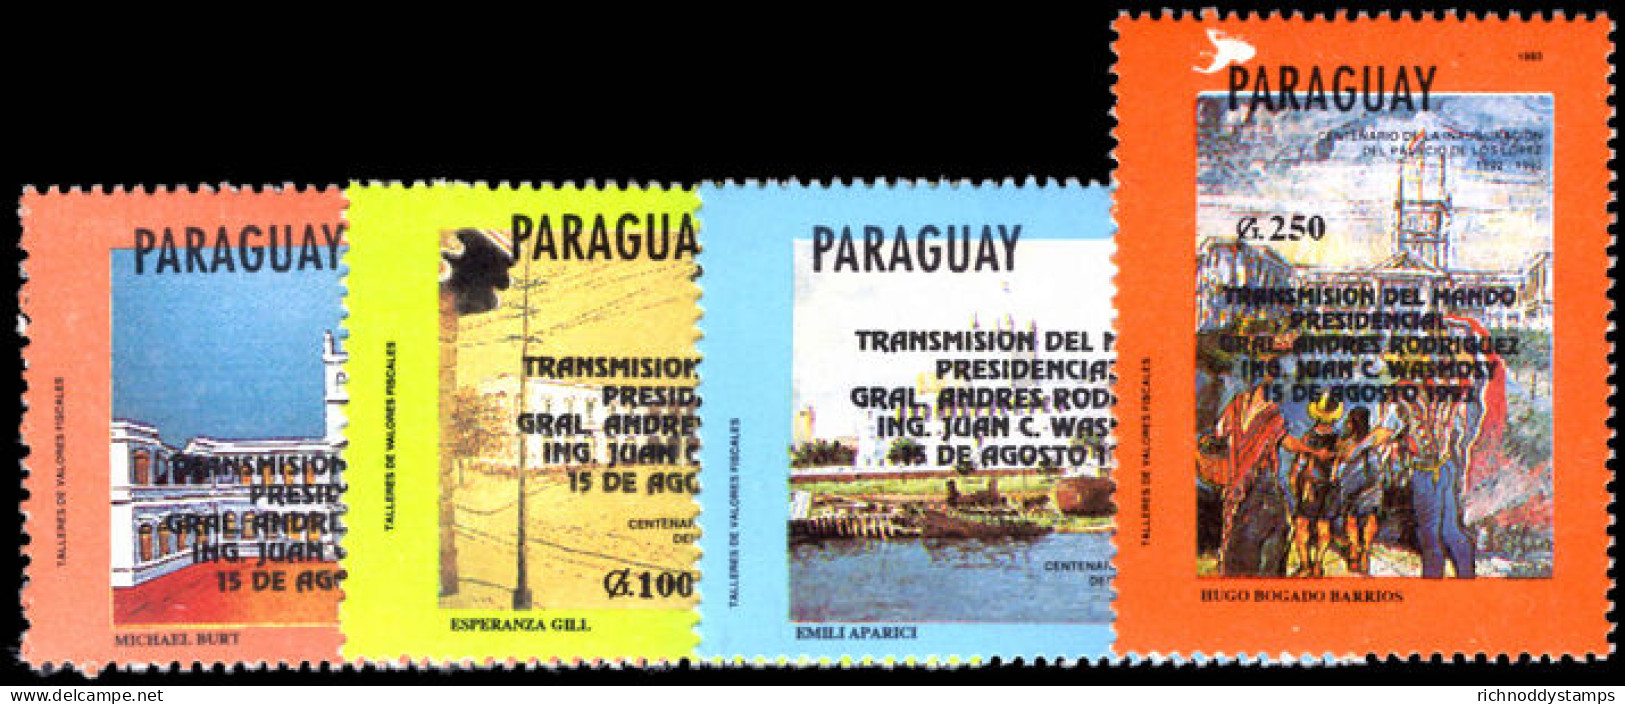 Paraguay 1993 Inauguration Of President Juan Carlos Wasmosy Unmounted Mint. - Paraguay